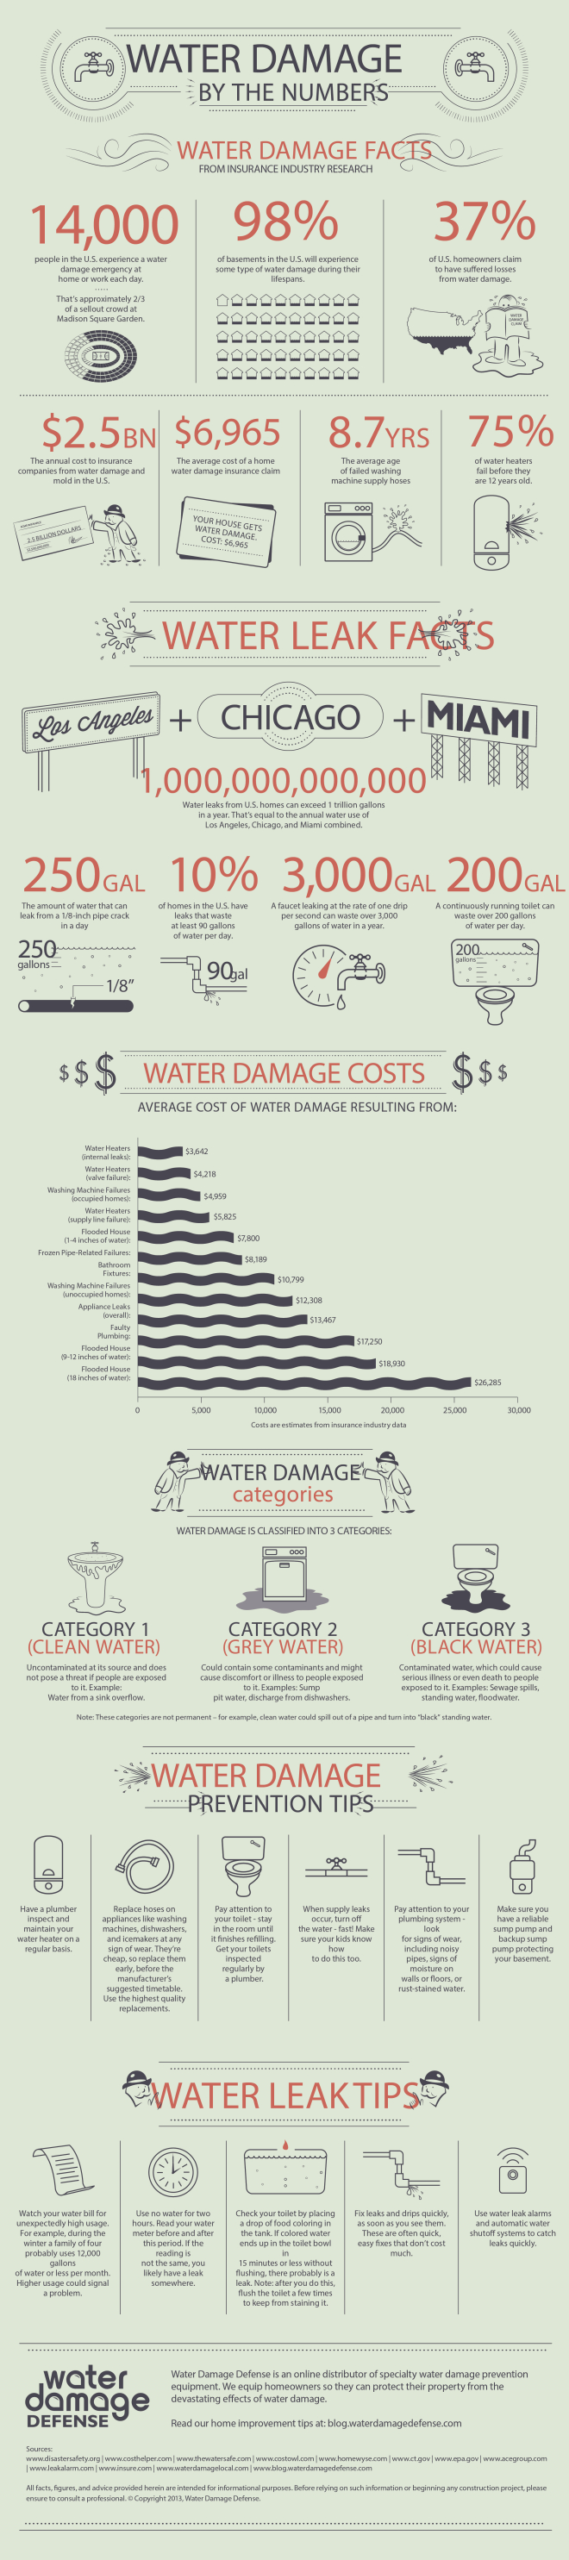 Water Damagethe Numbers | Water Damage, Flood Pertaining To Water Damage Estimate Template